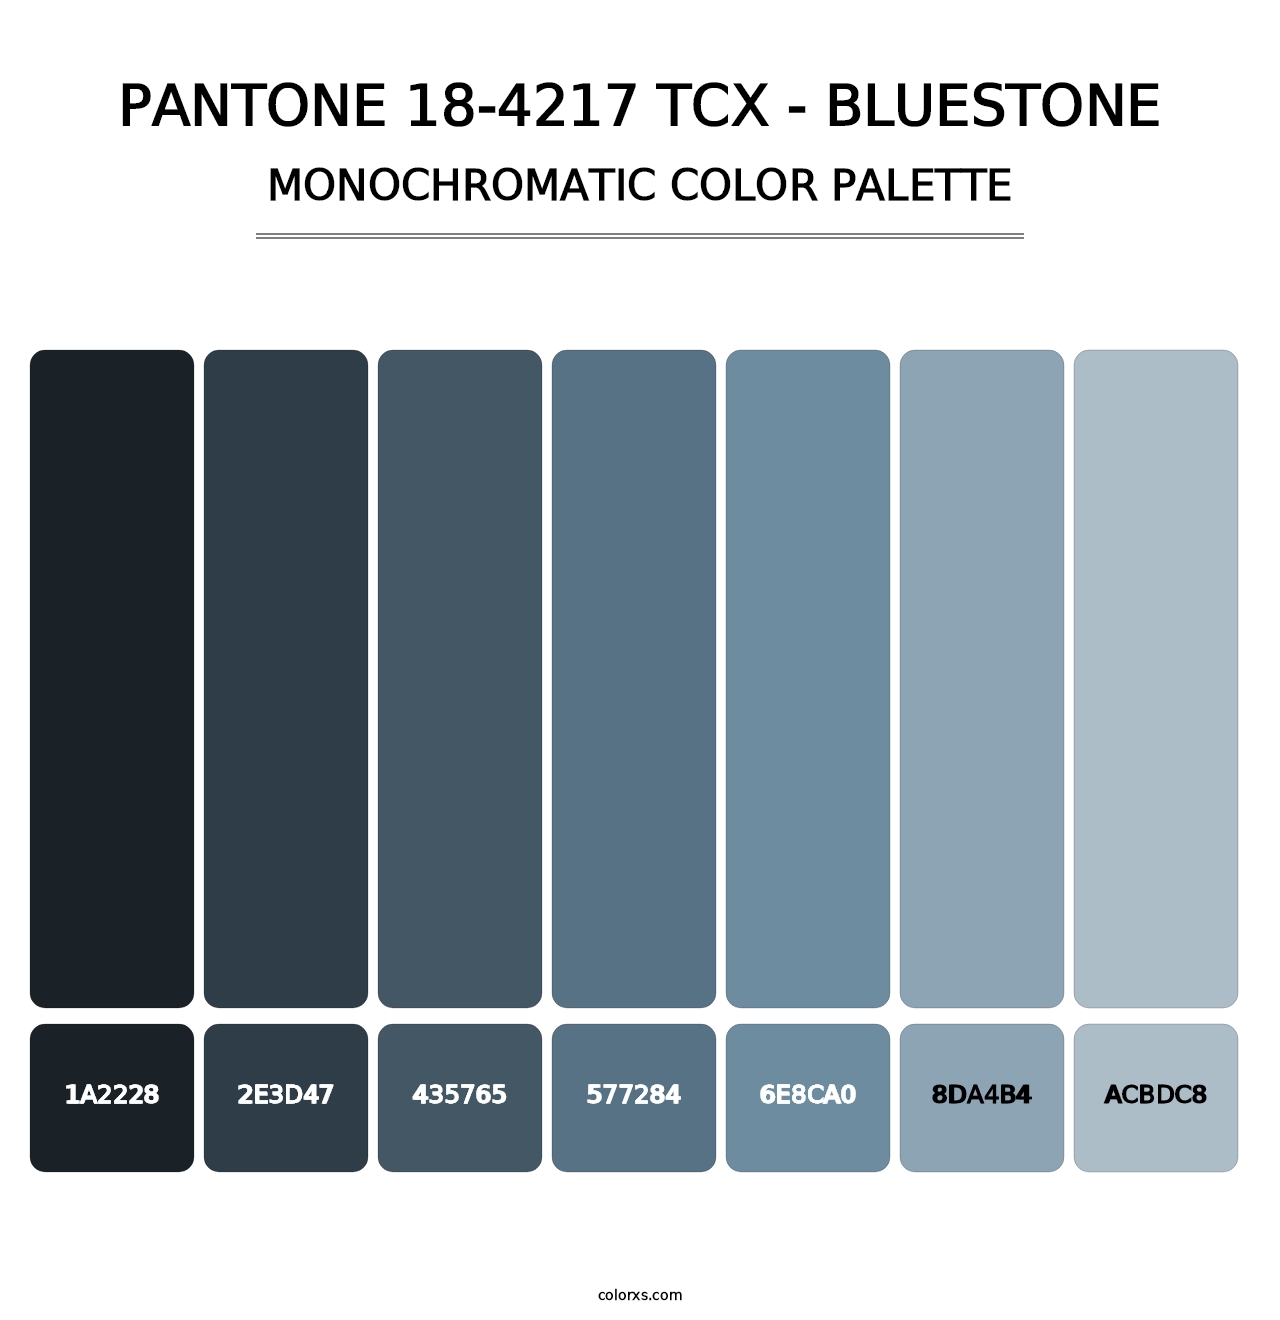 PANTONE 18-4217 TCX - Bluestone - Monochromatic Color Palette